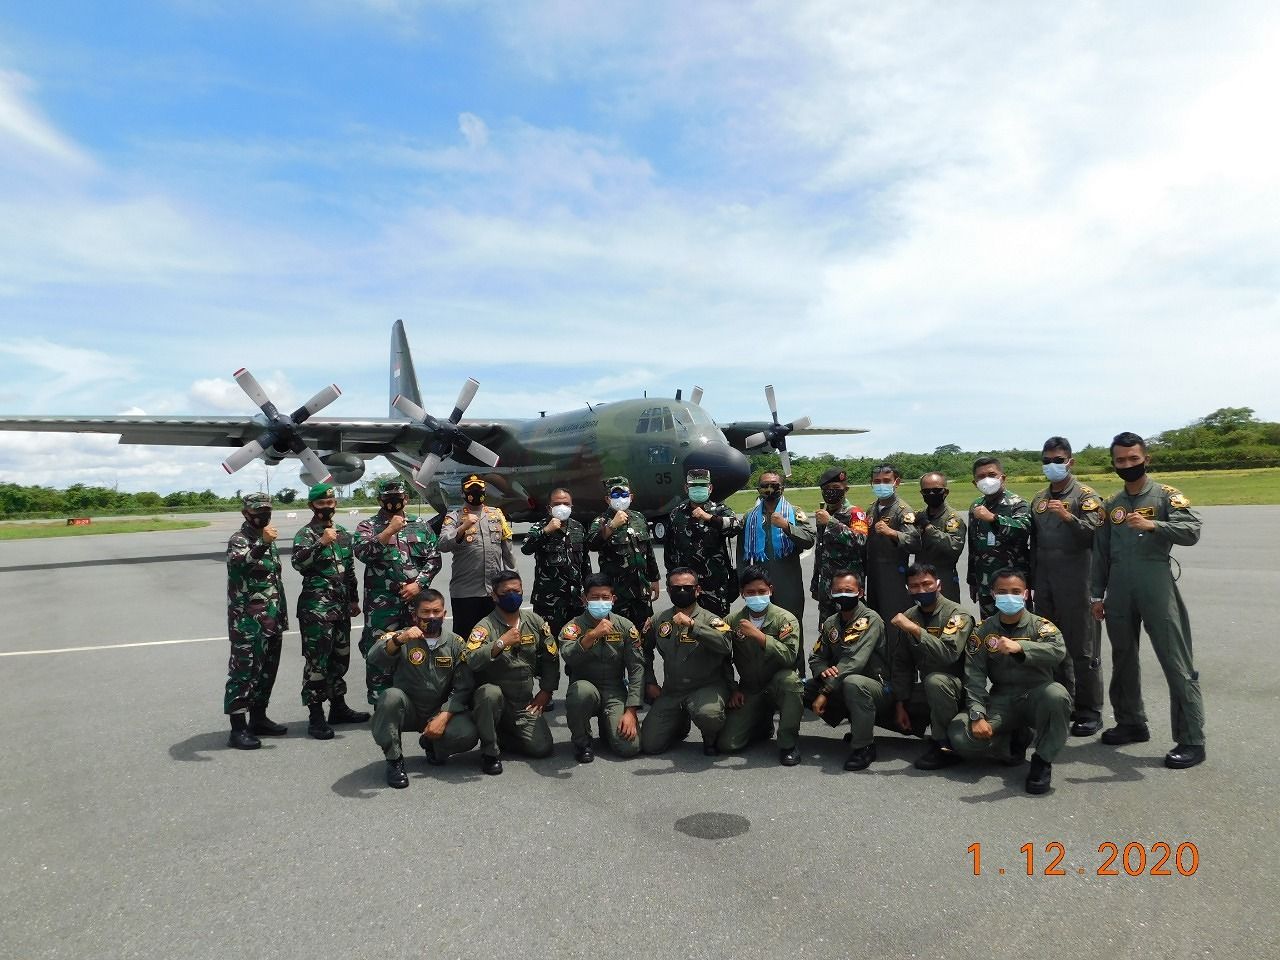 Pertama Kali C-130 Hercules Landing di Bandara Udara Mathilda Batlayeri Kepulauan Tanimbar 